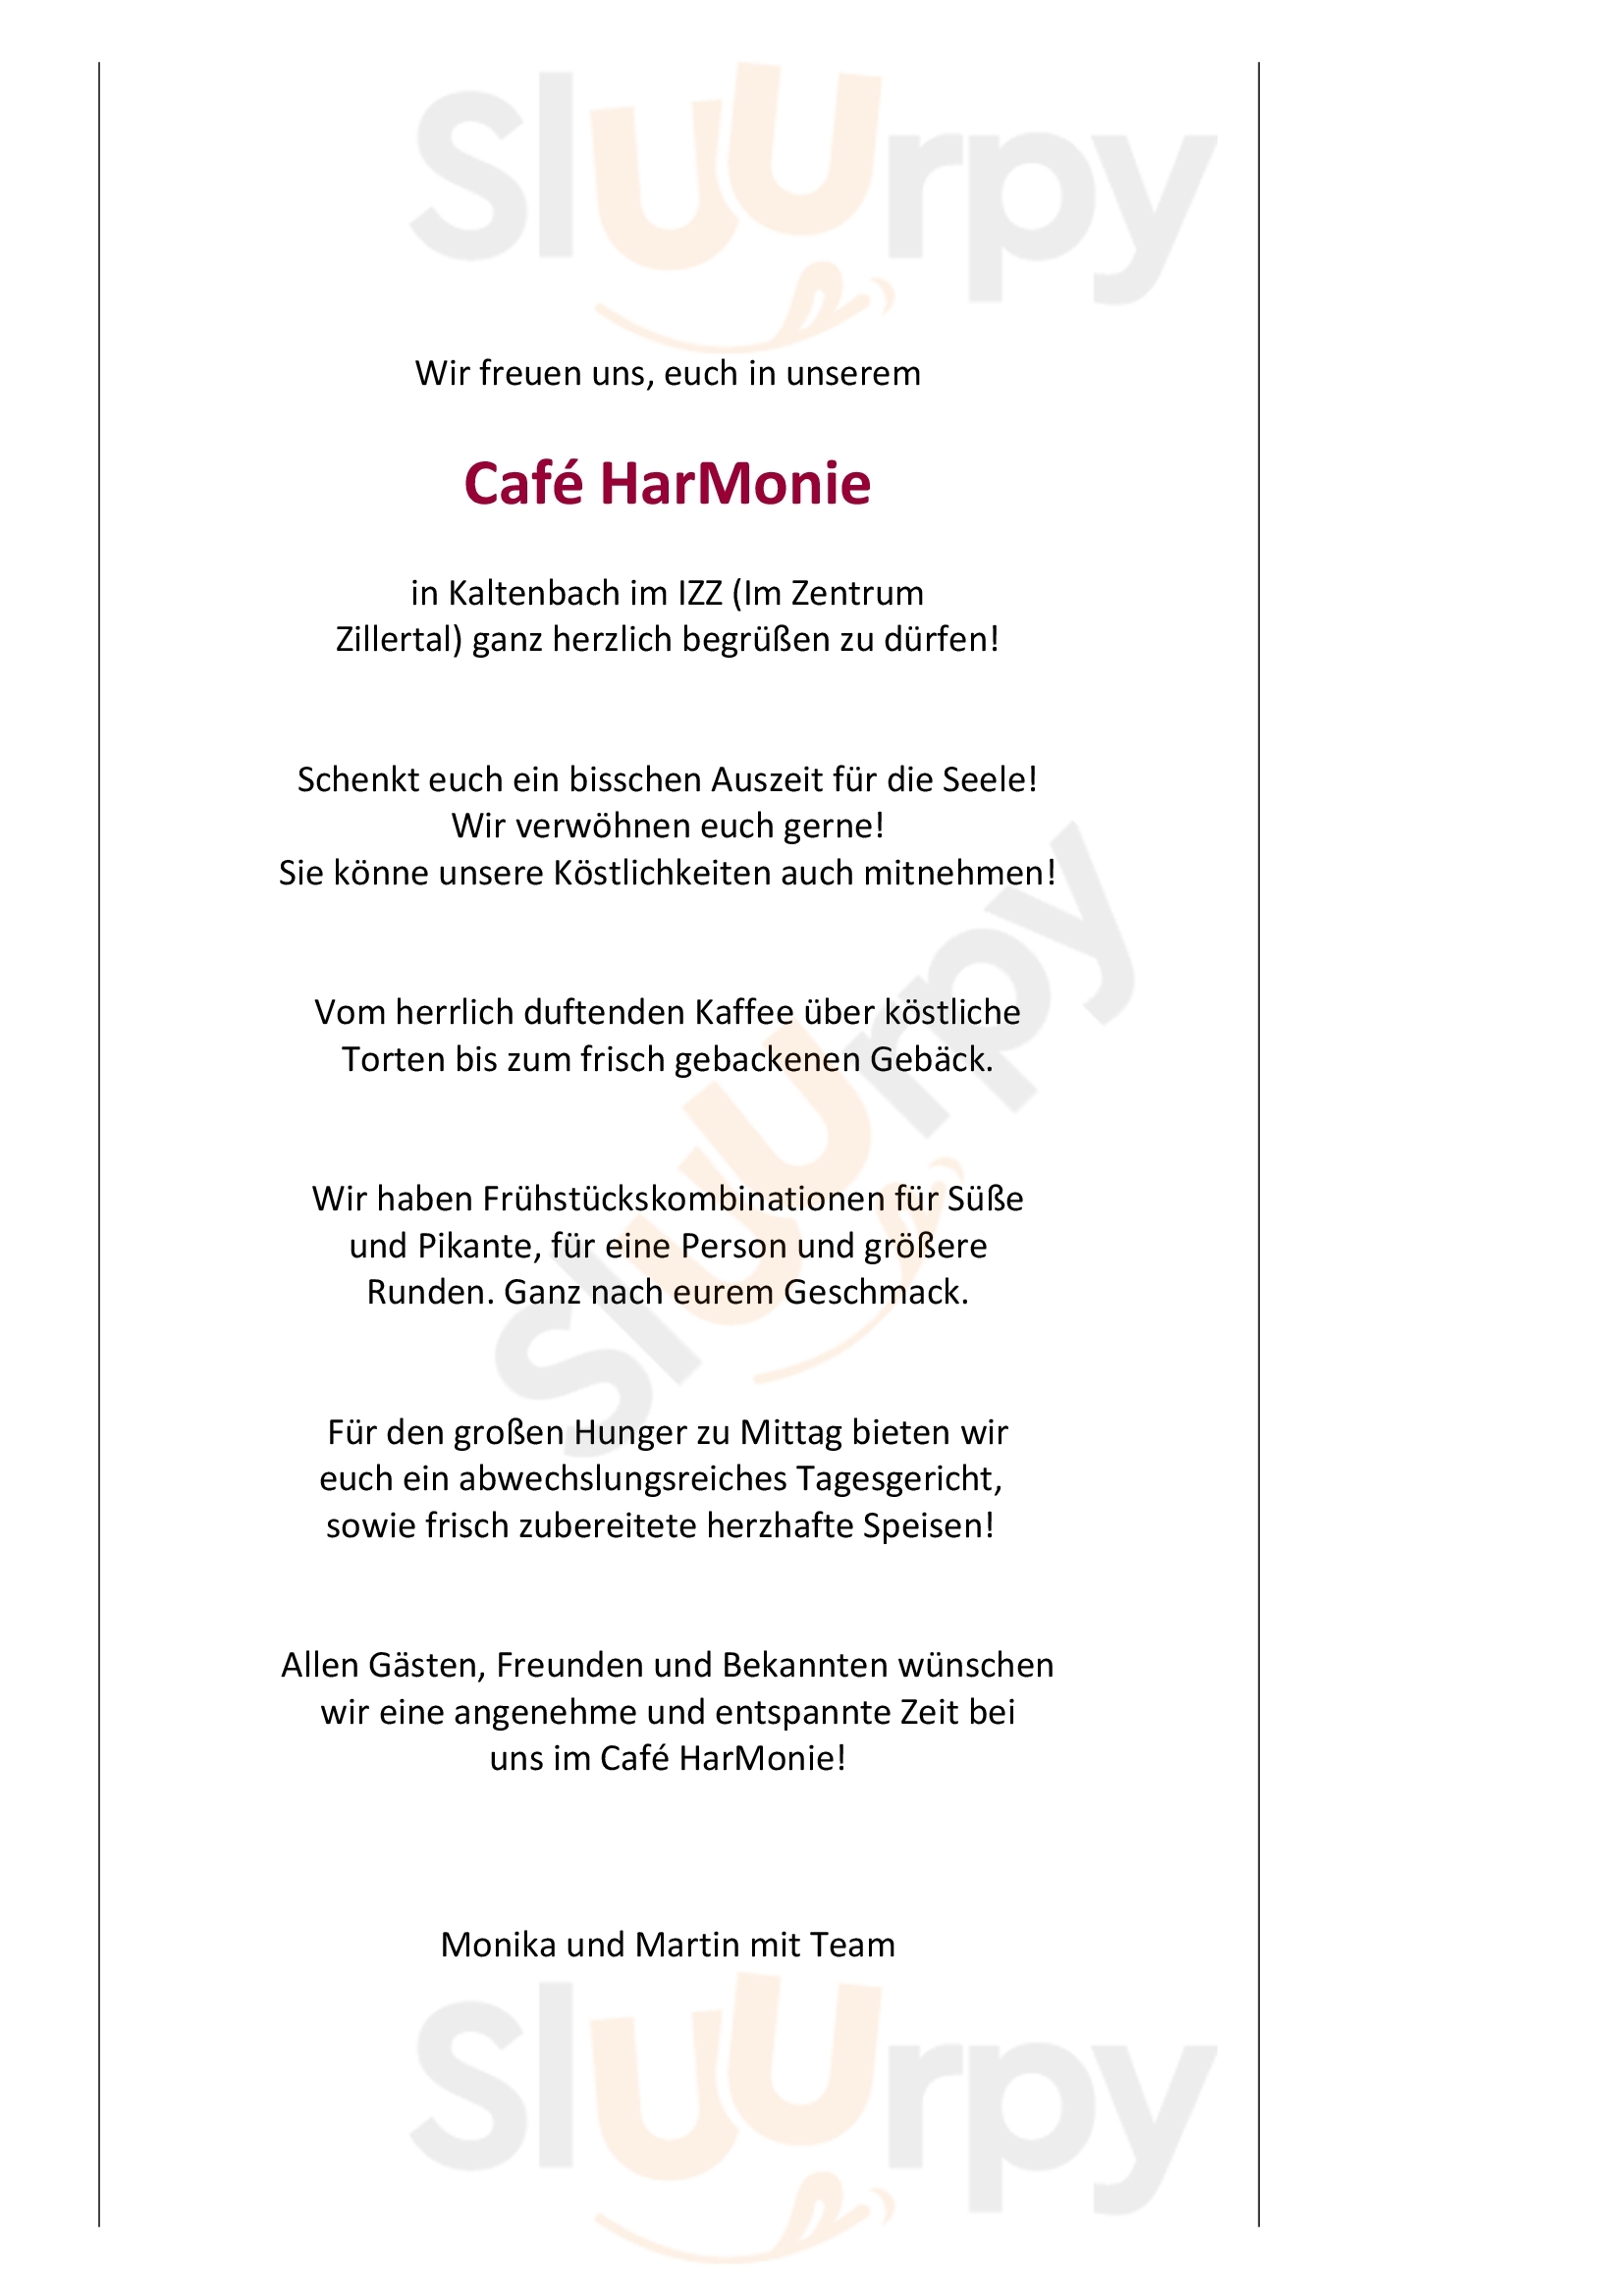 Cafe Harmonie Kaltenbach Menu - 1